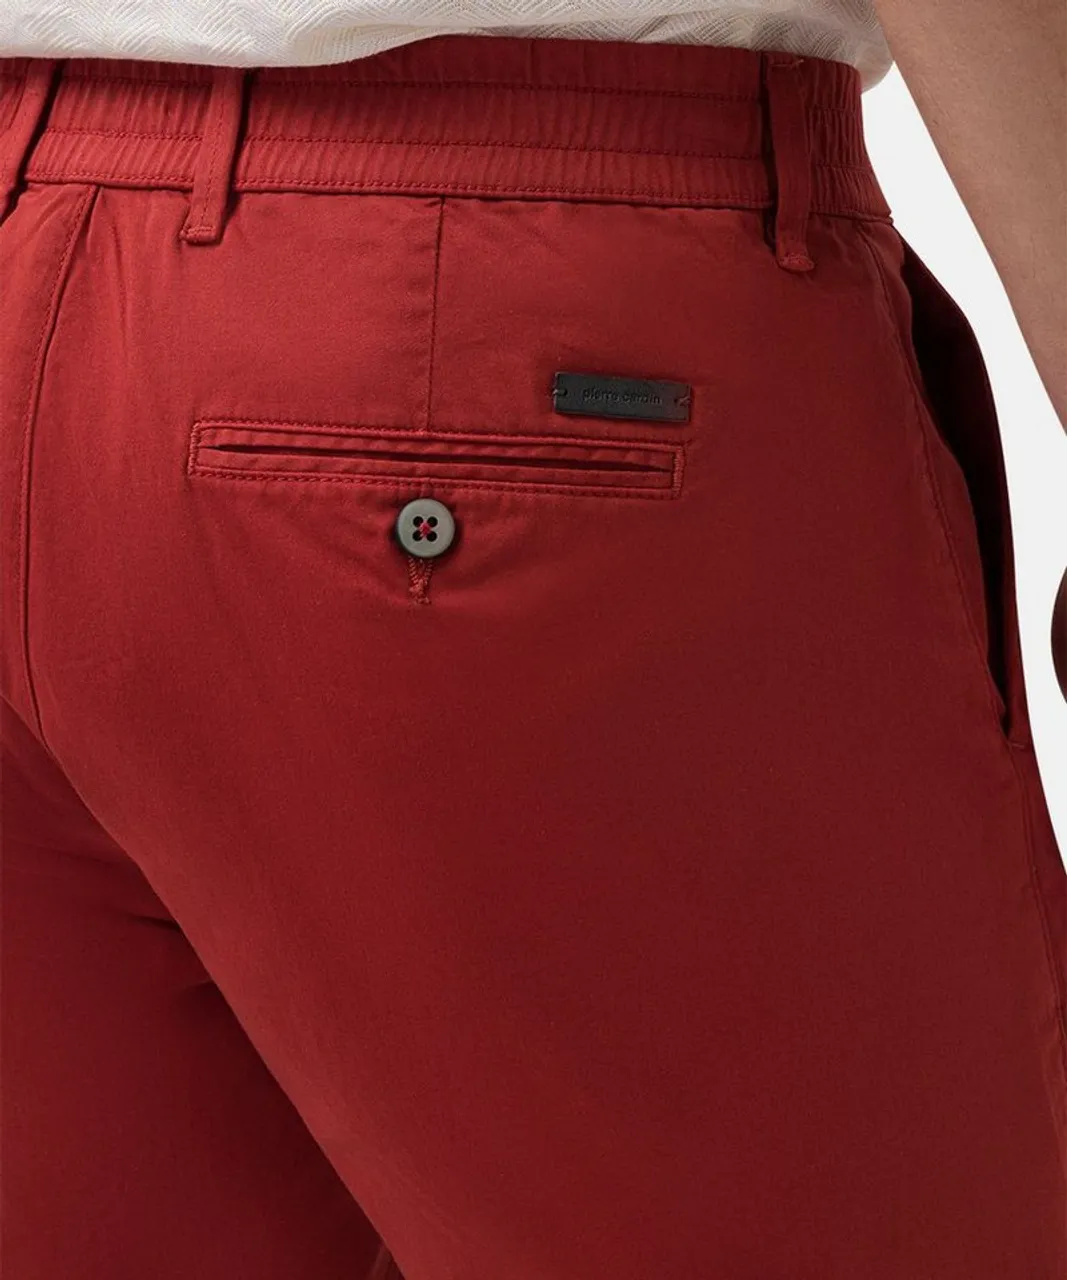 Pierre Cardin 5-Pocket-Hose